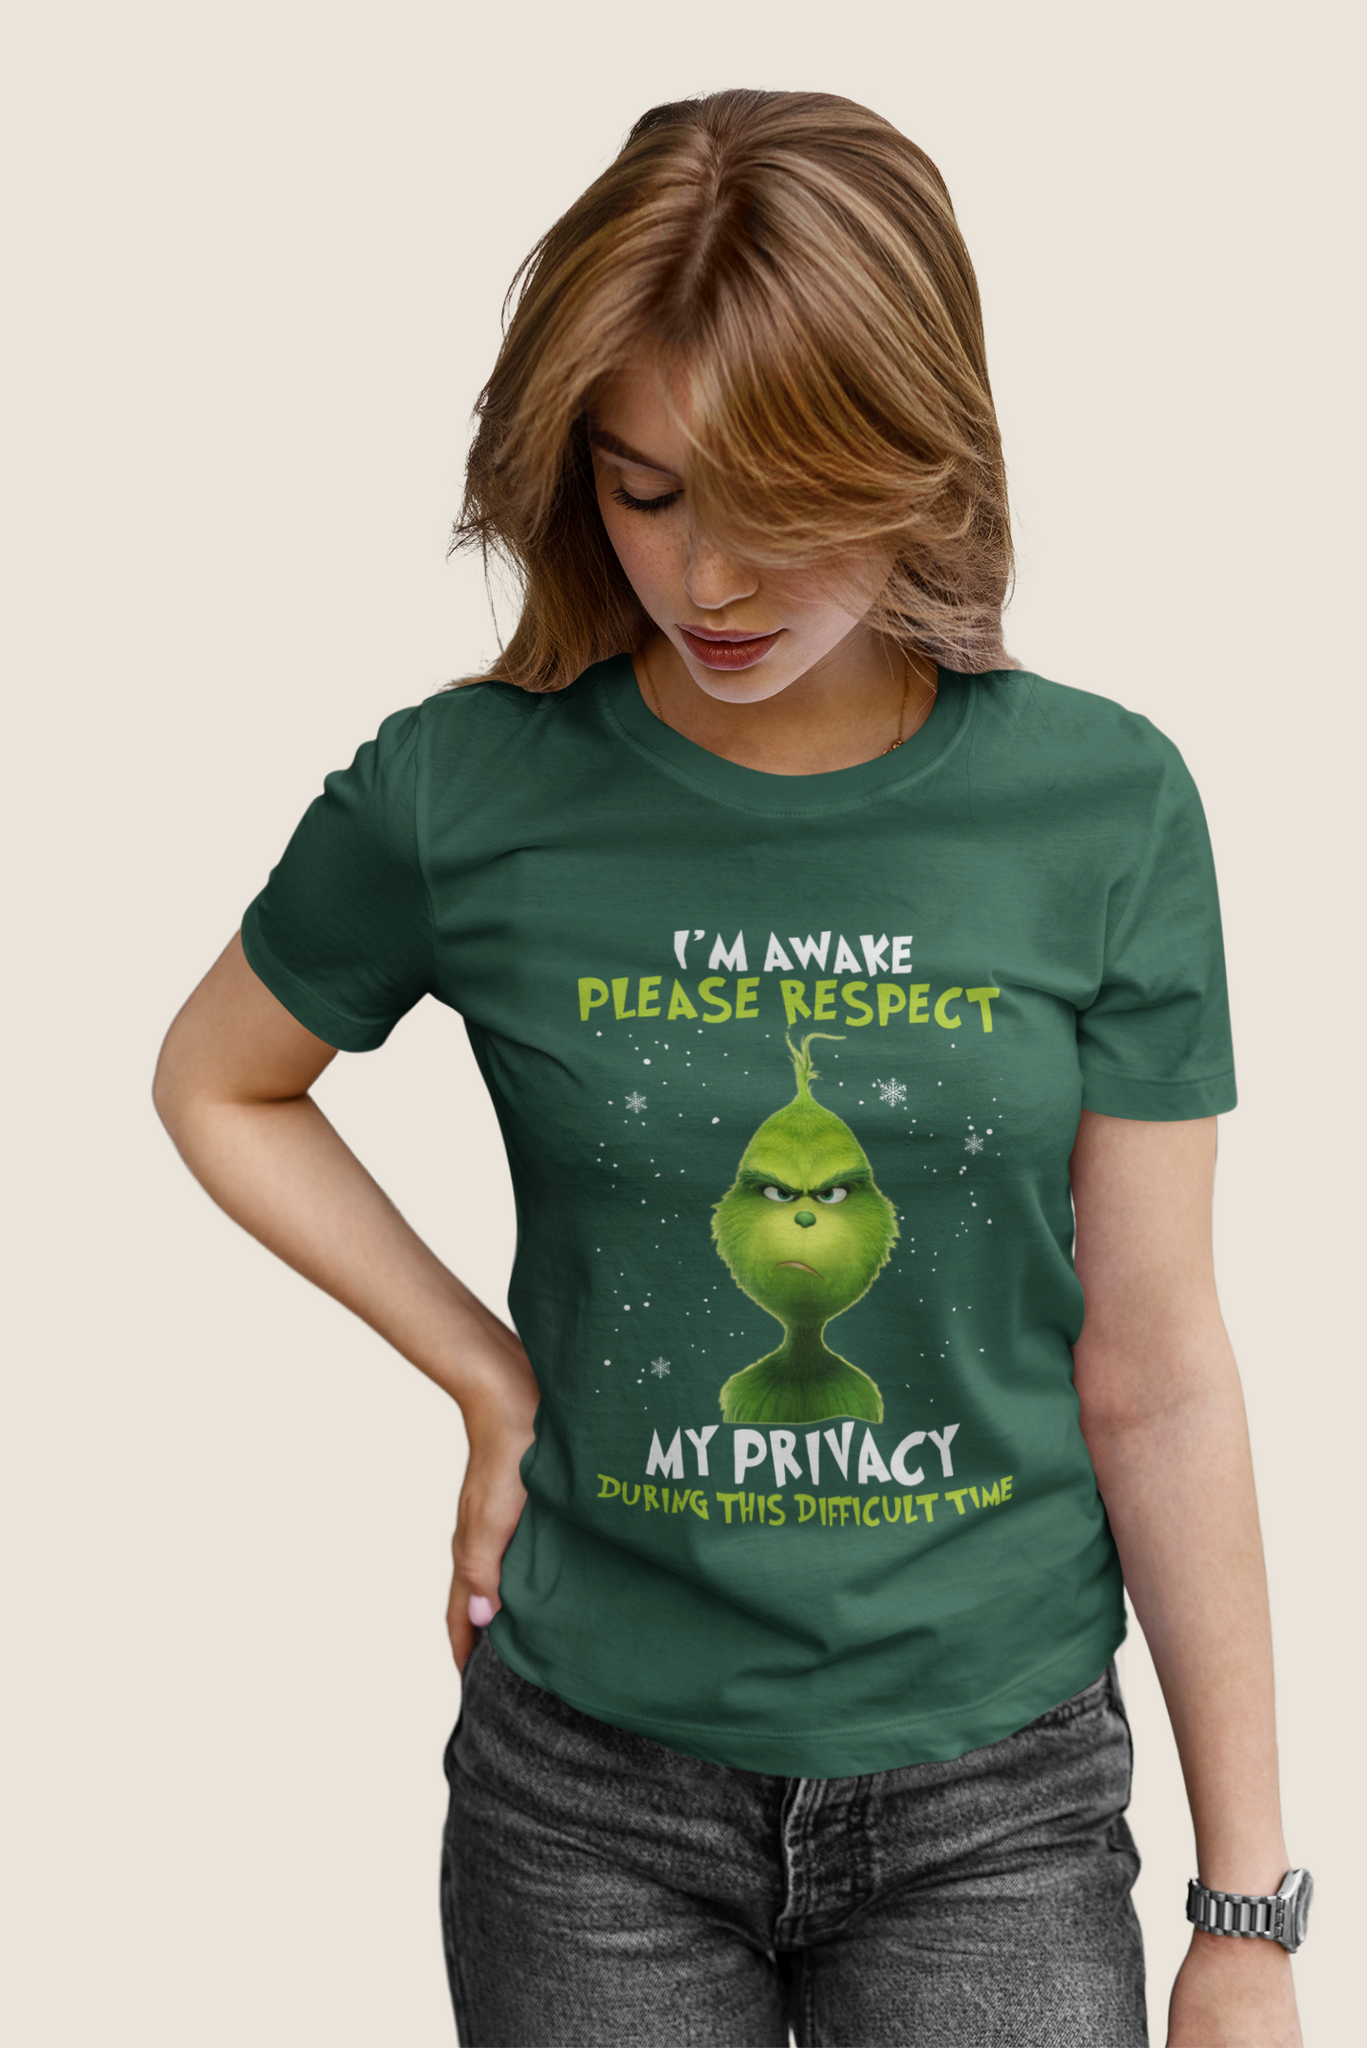 Grinch T Shirt, Im Awake Please Respect My Privacy Tshirt, Christmas Movie Shirt, Christmas Gifts